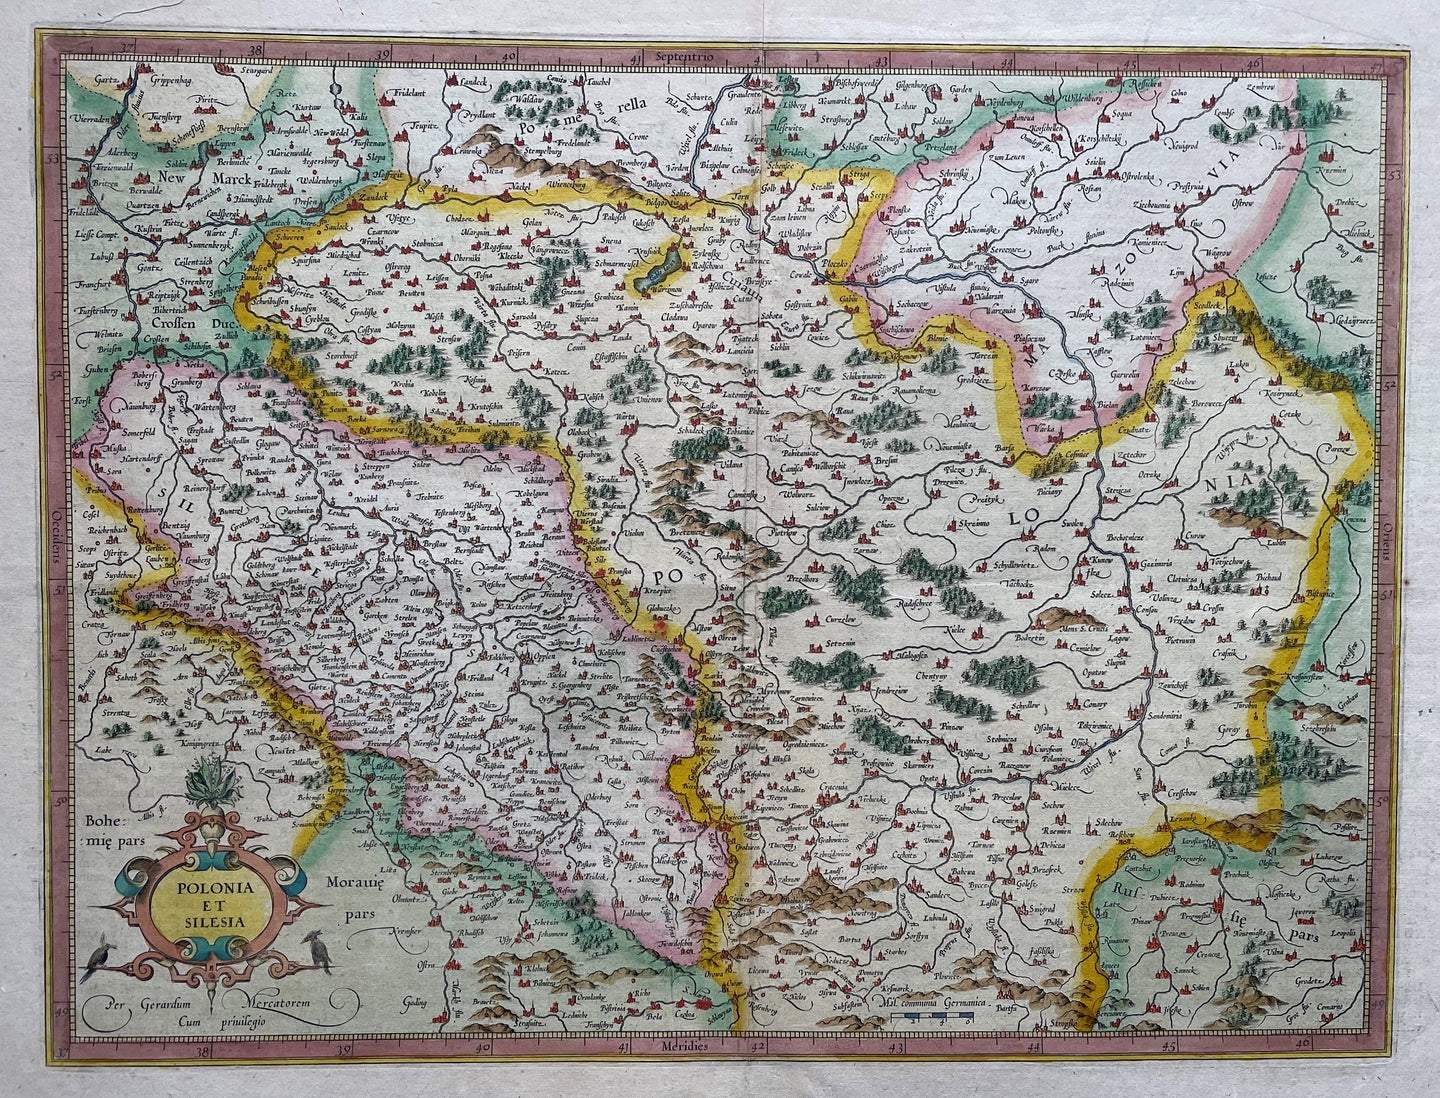 Polen Poland - G Mercator / H Hondius - 1628